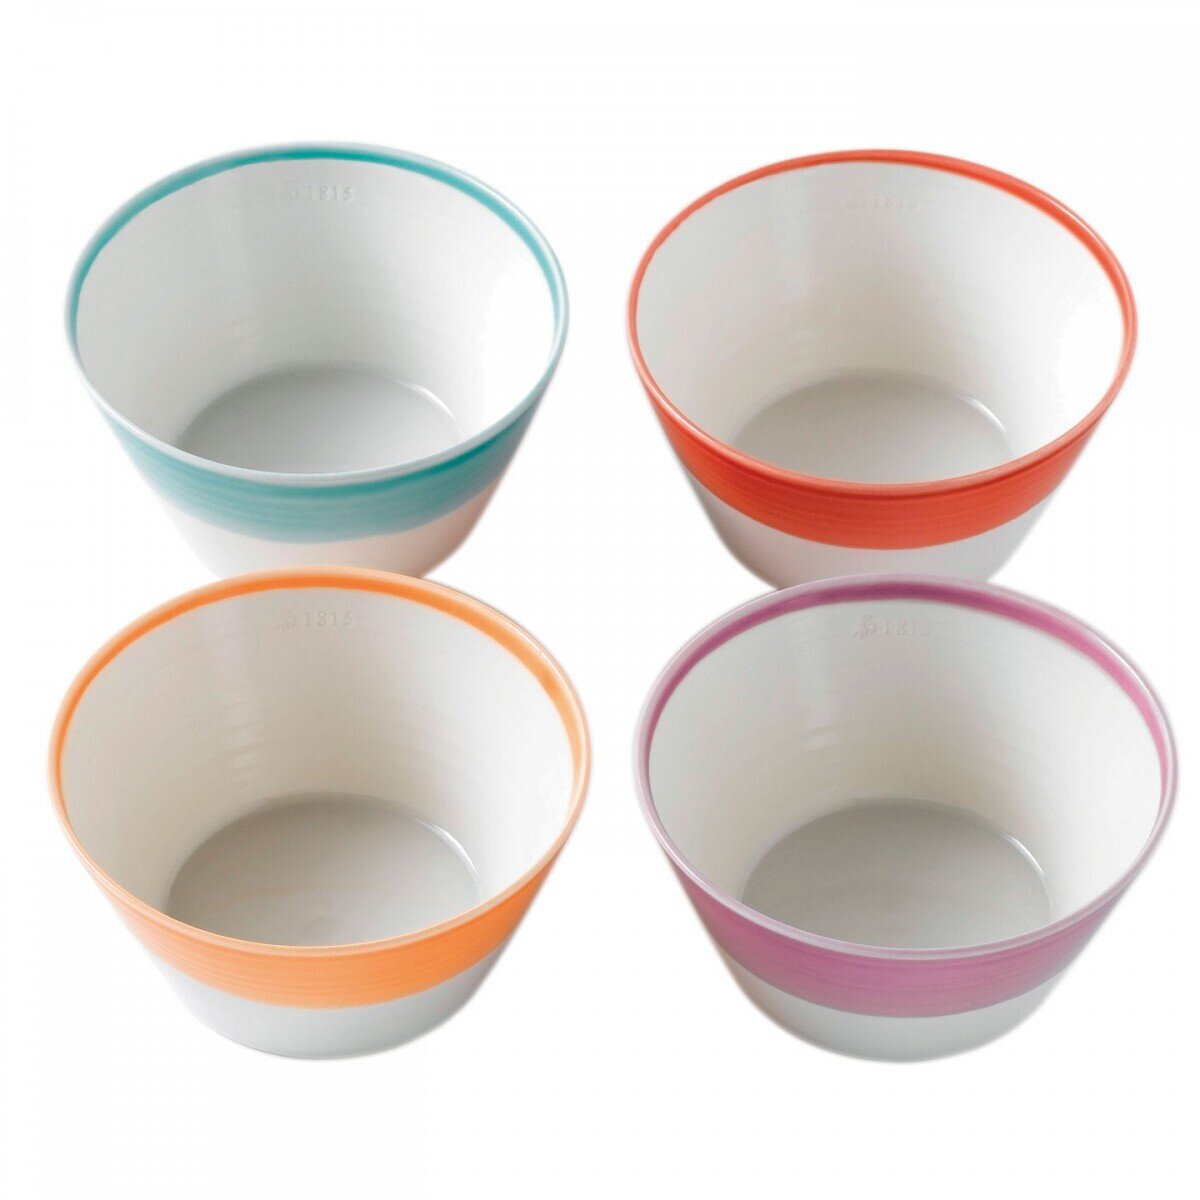 Royal Doulton 1815 Bright Colors Mixed Patterns Cereal Bowls Set of 4